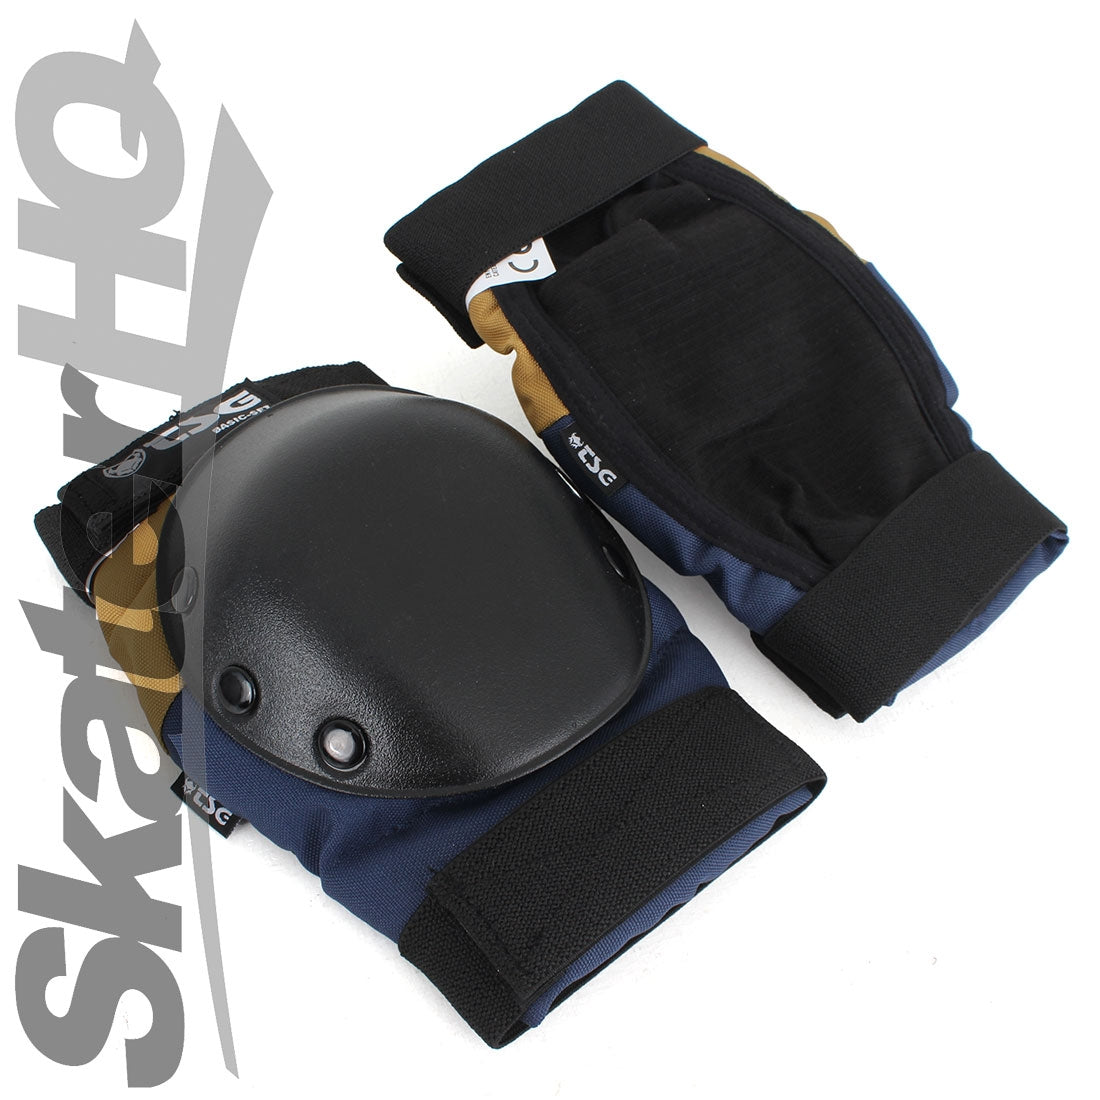 TSG Basic Skate Set Navy/Tan - Large Protective Gear